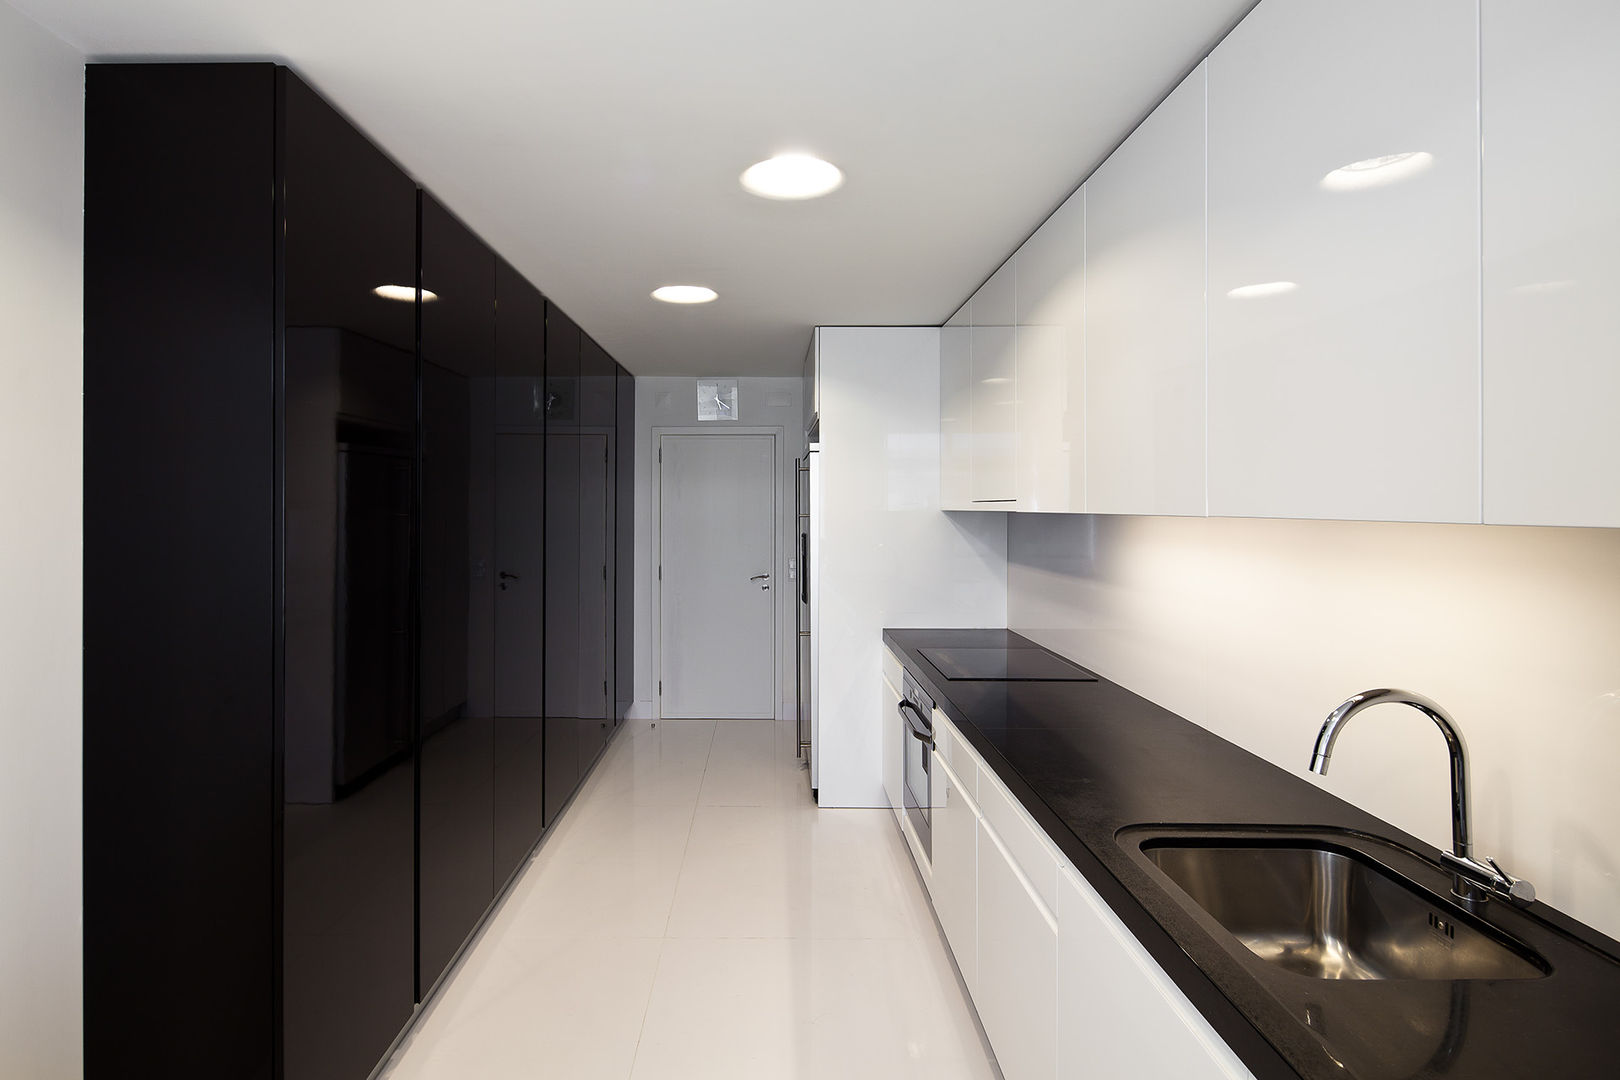 Apartamento JSJ — Ajuda, Lisboa, FMO ARCHITECTURE FMO ARCHITECTURE Cocinas de estilo minimalista